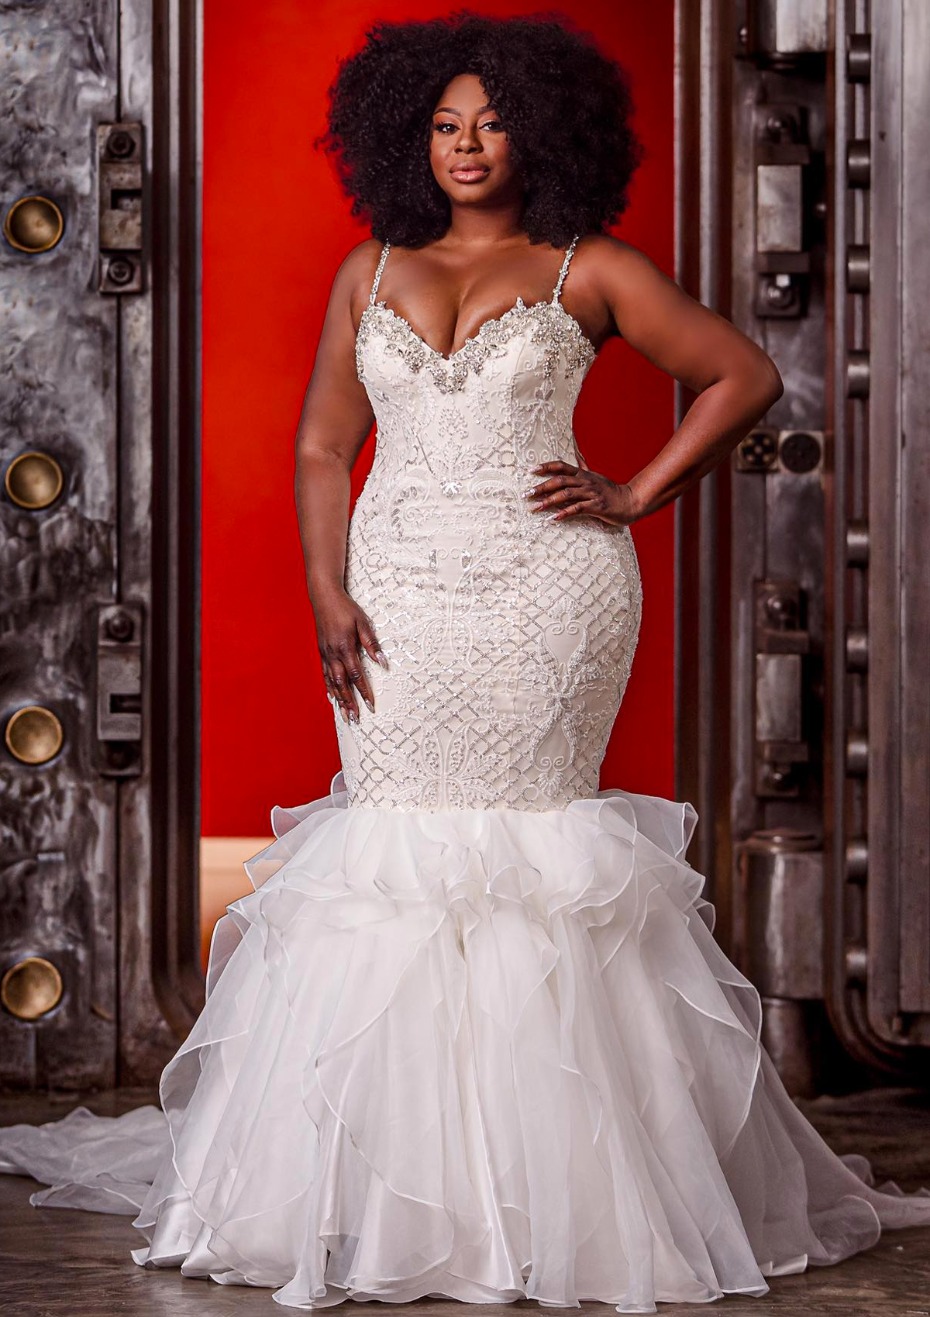 Black Wedding Dress Designers You Should Know